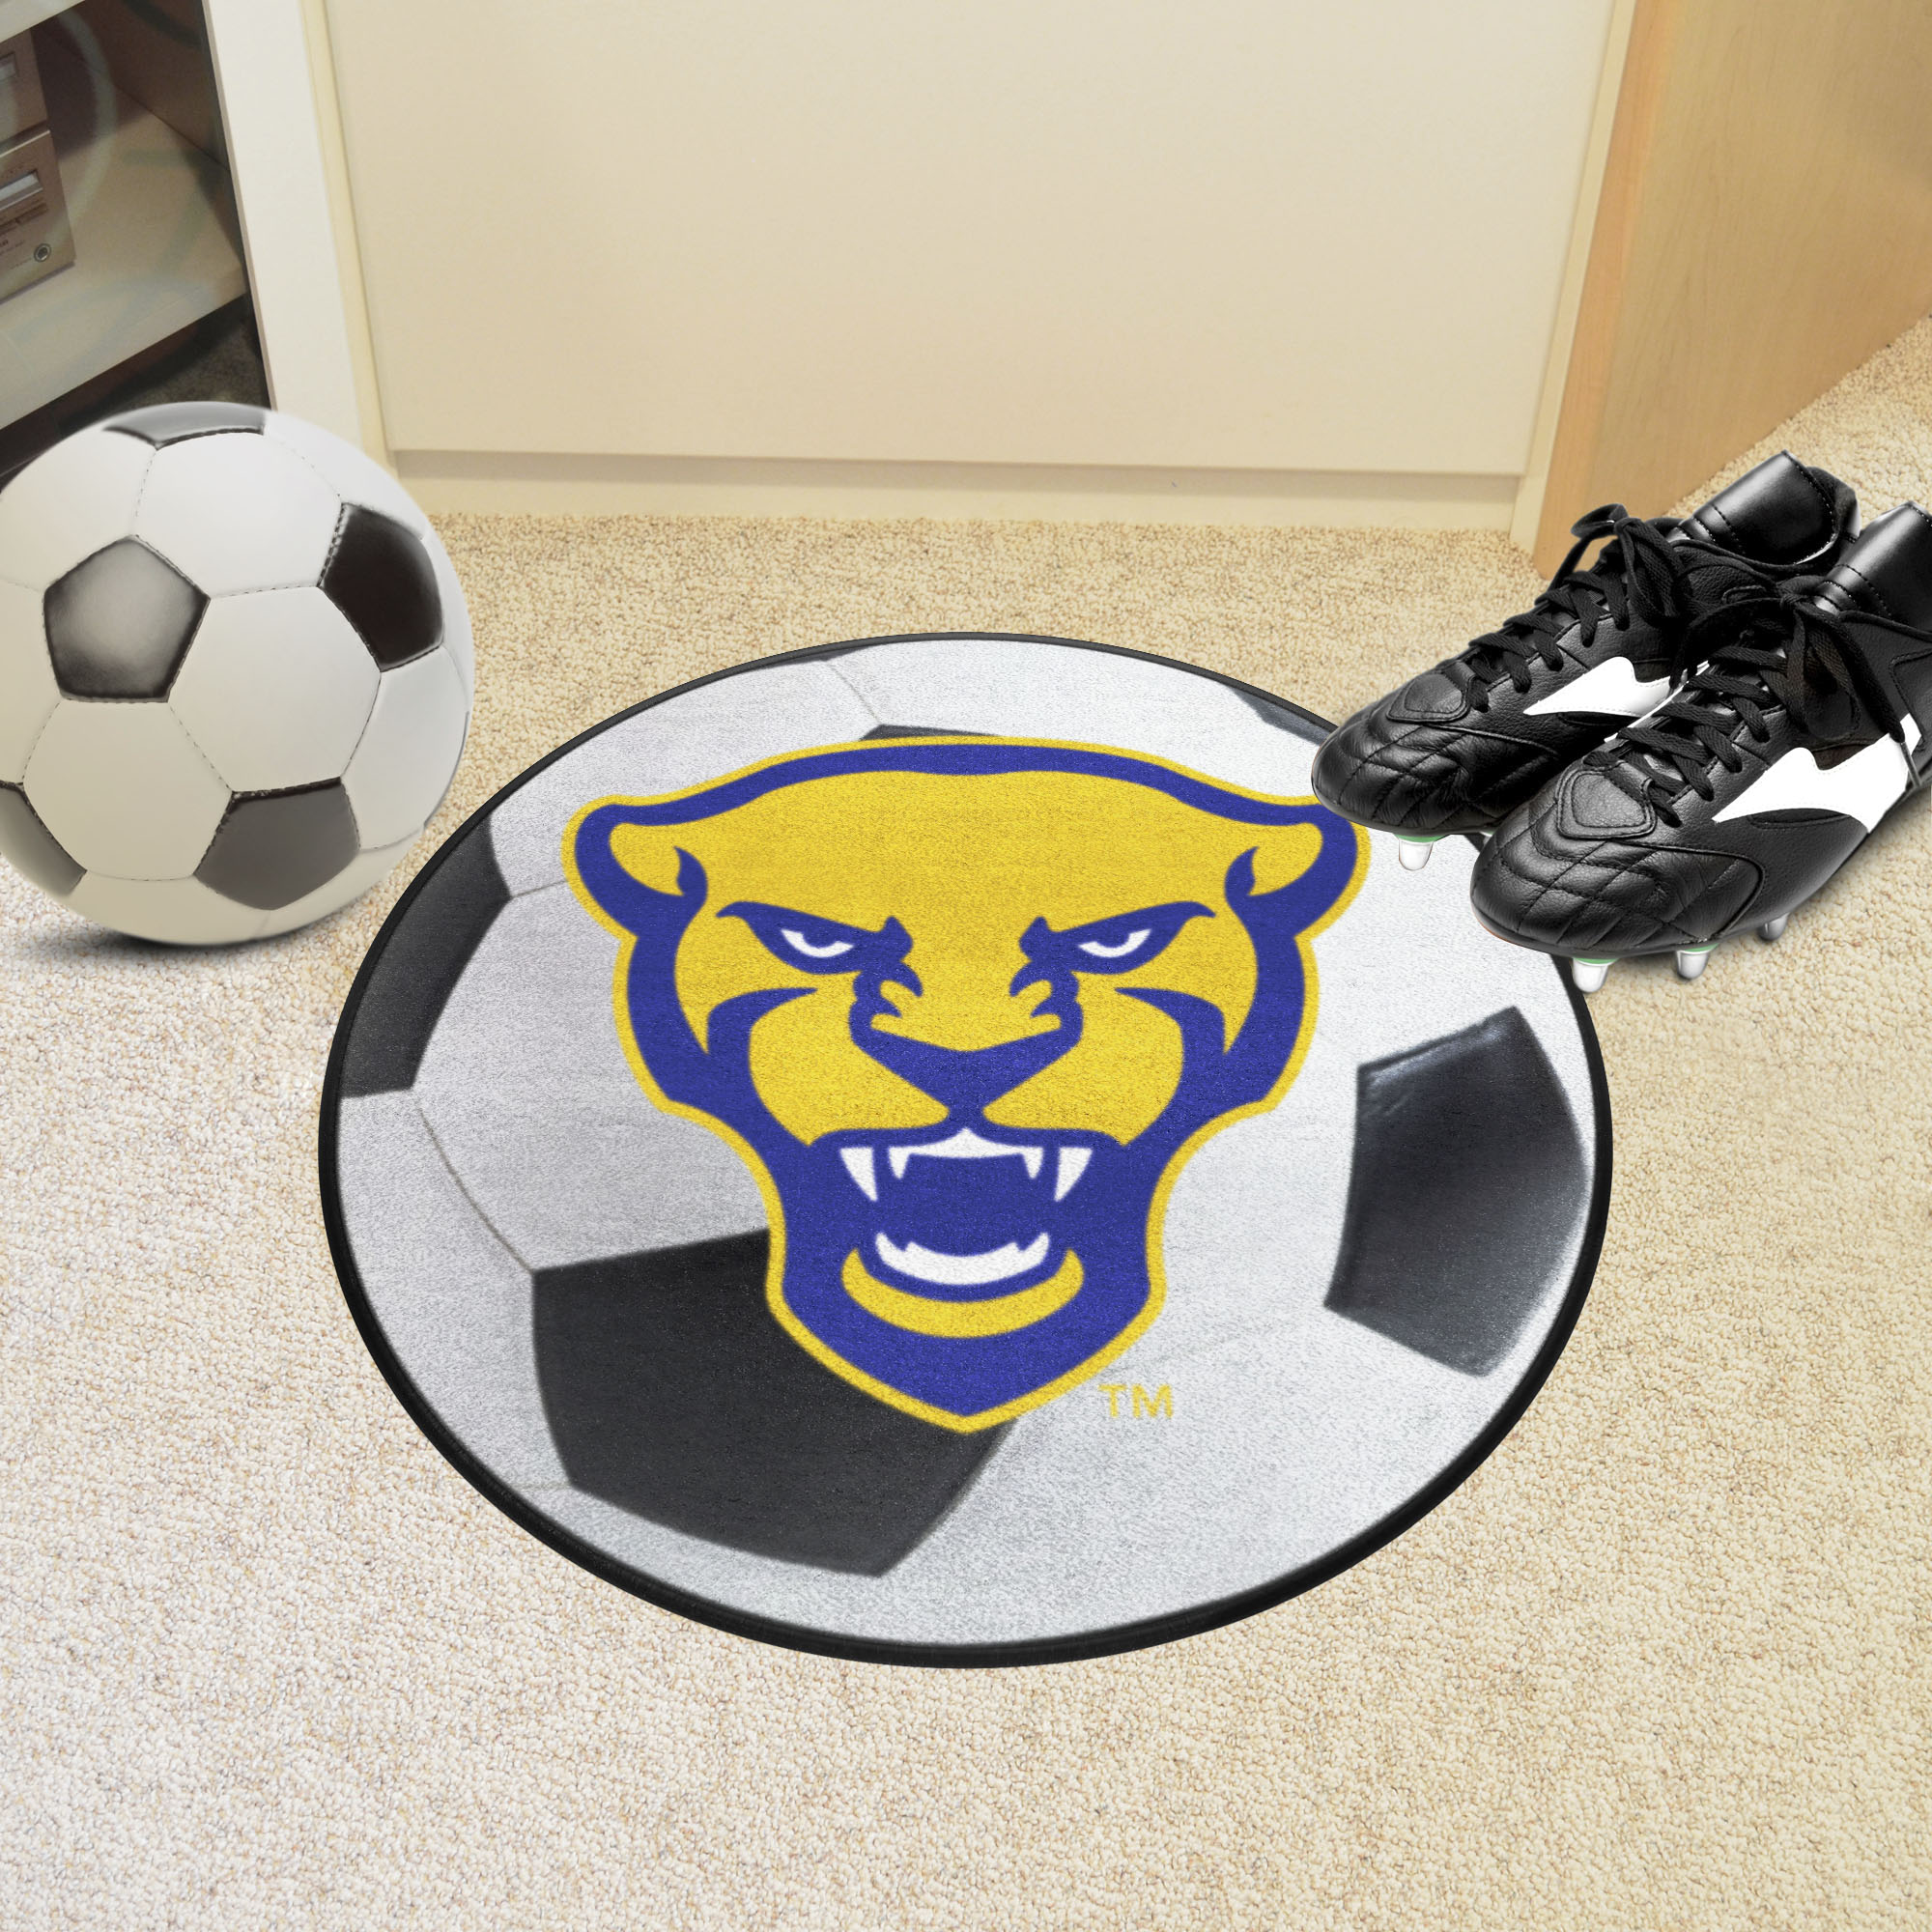 Pitt Panthers Logo Soccer Ball Shaped Area Rug